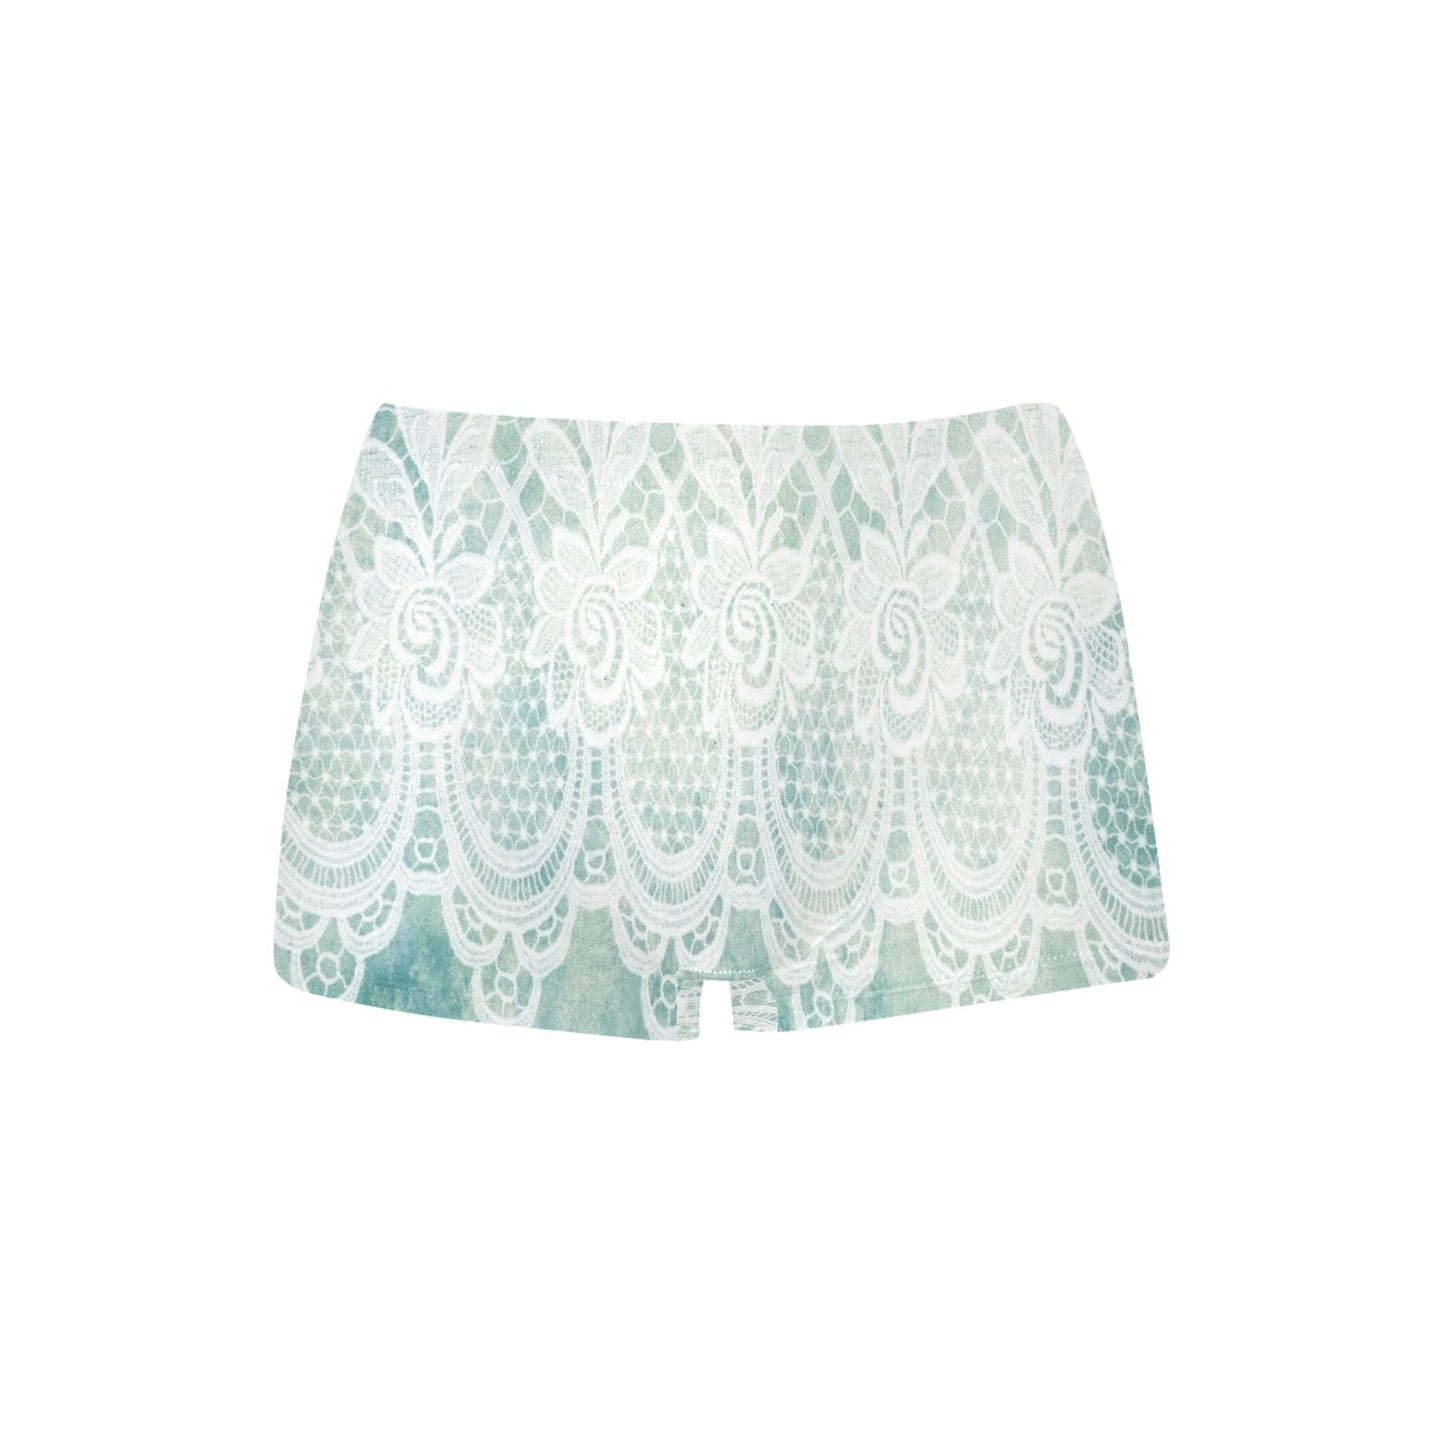 Printed Lace Boyshorts, daisy dukes, pum pum shorts, shortie shorts , design 41B